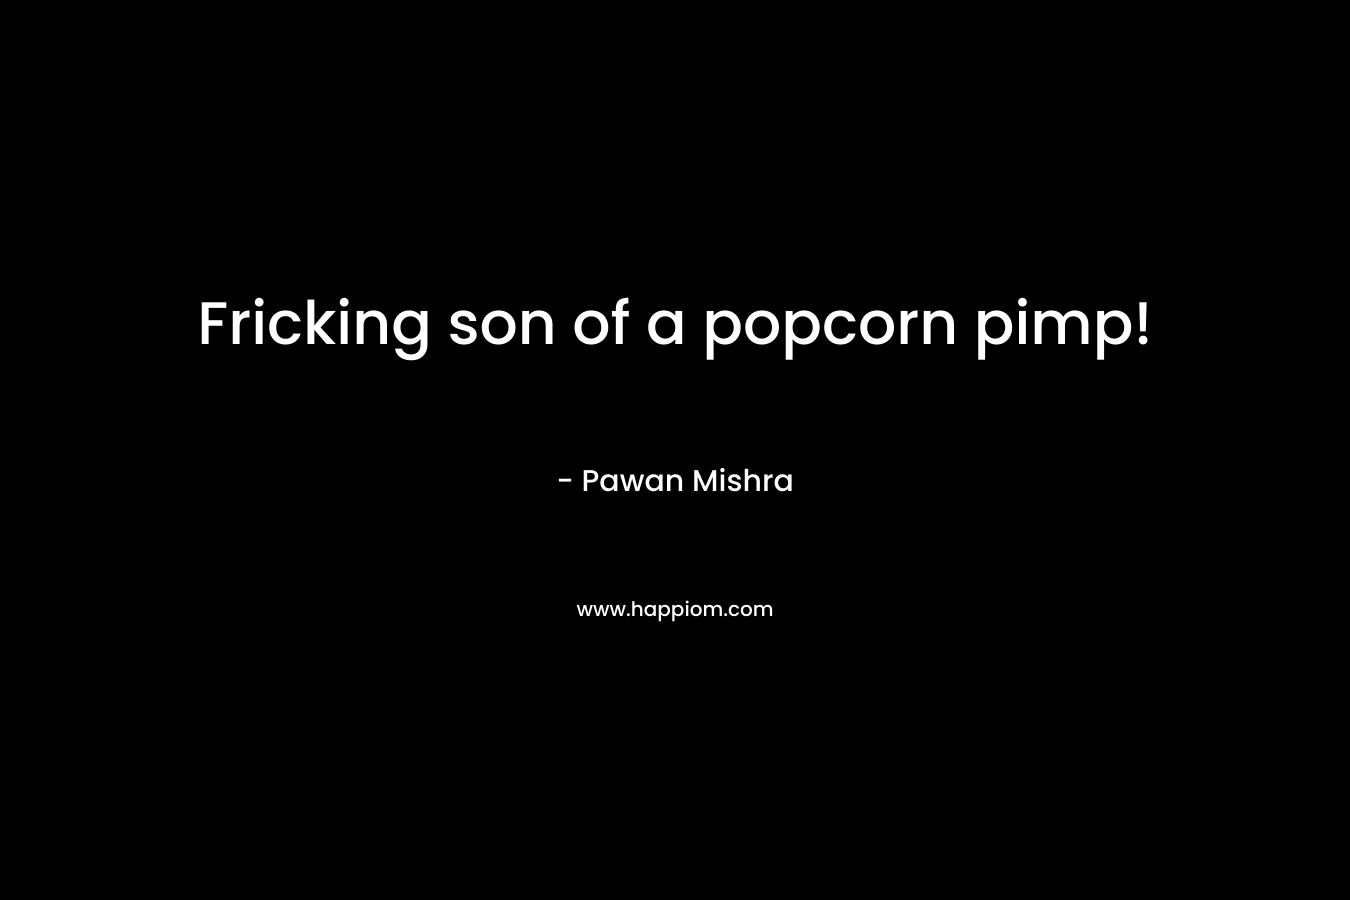 Fricking son of a popcorn pimp! – Pawan Mishra